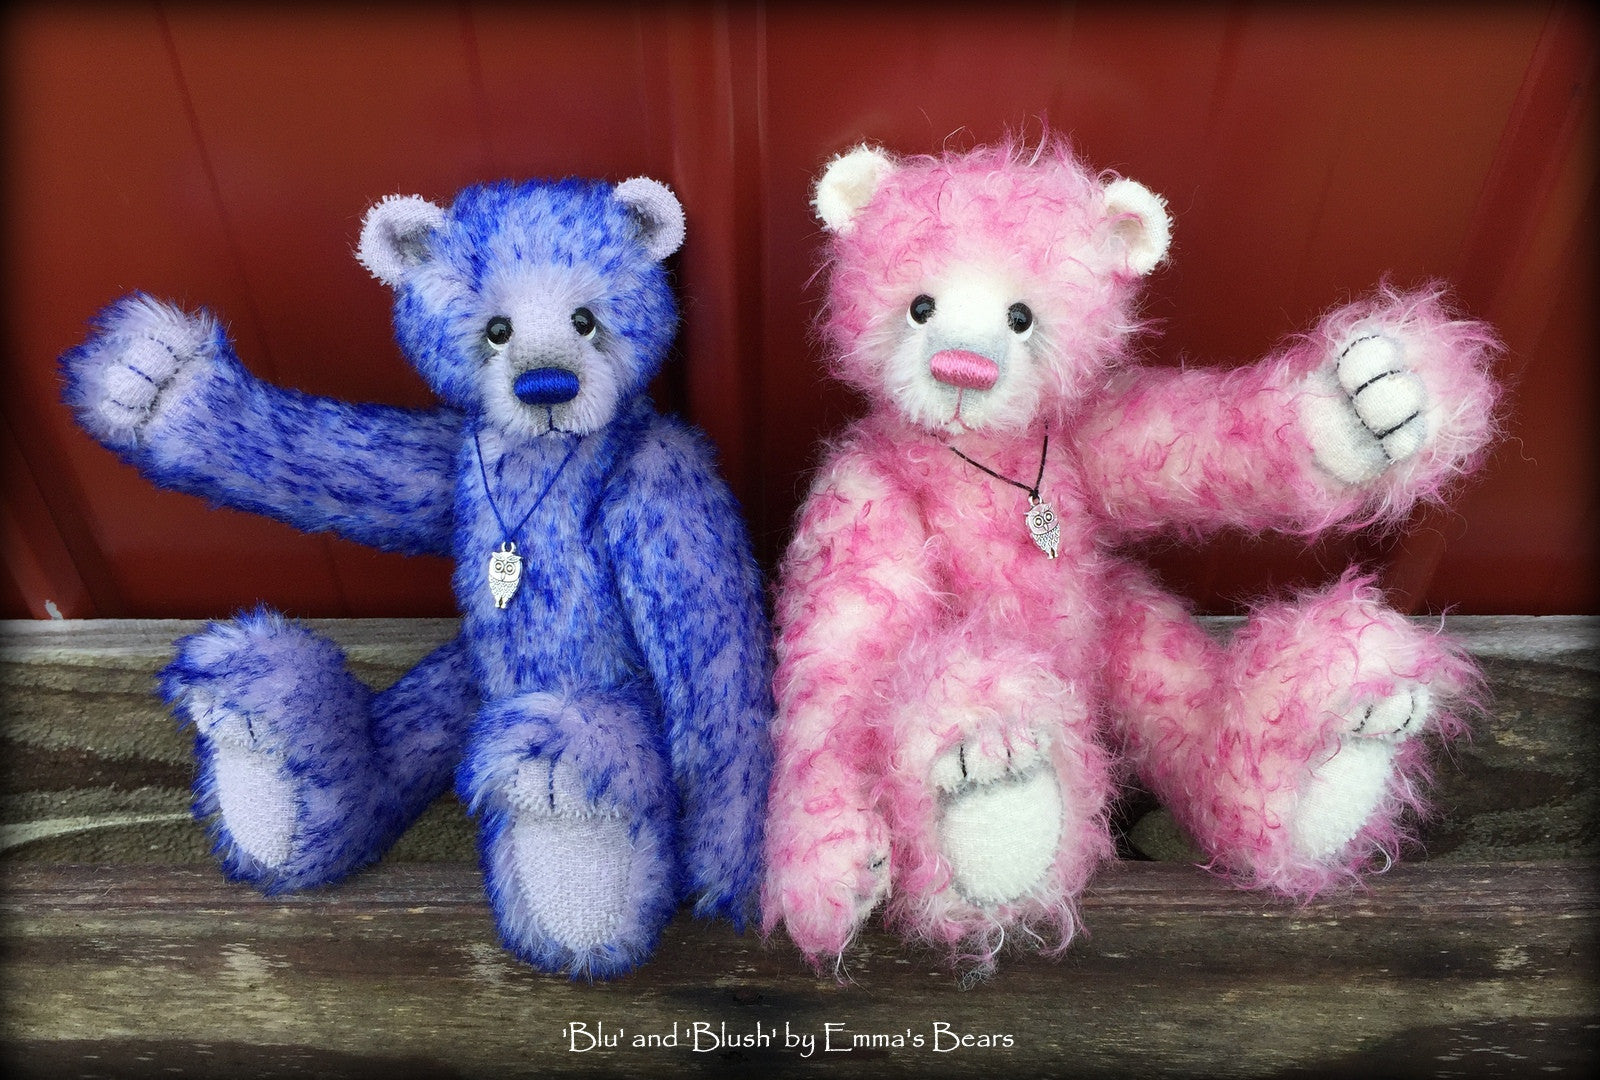 Blush - 9" mohair bear by Emmas Bears - OOAK